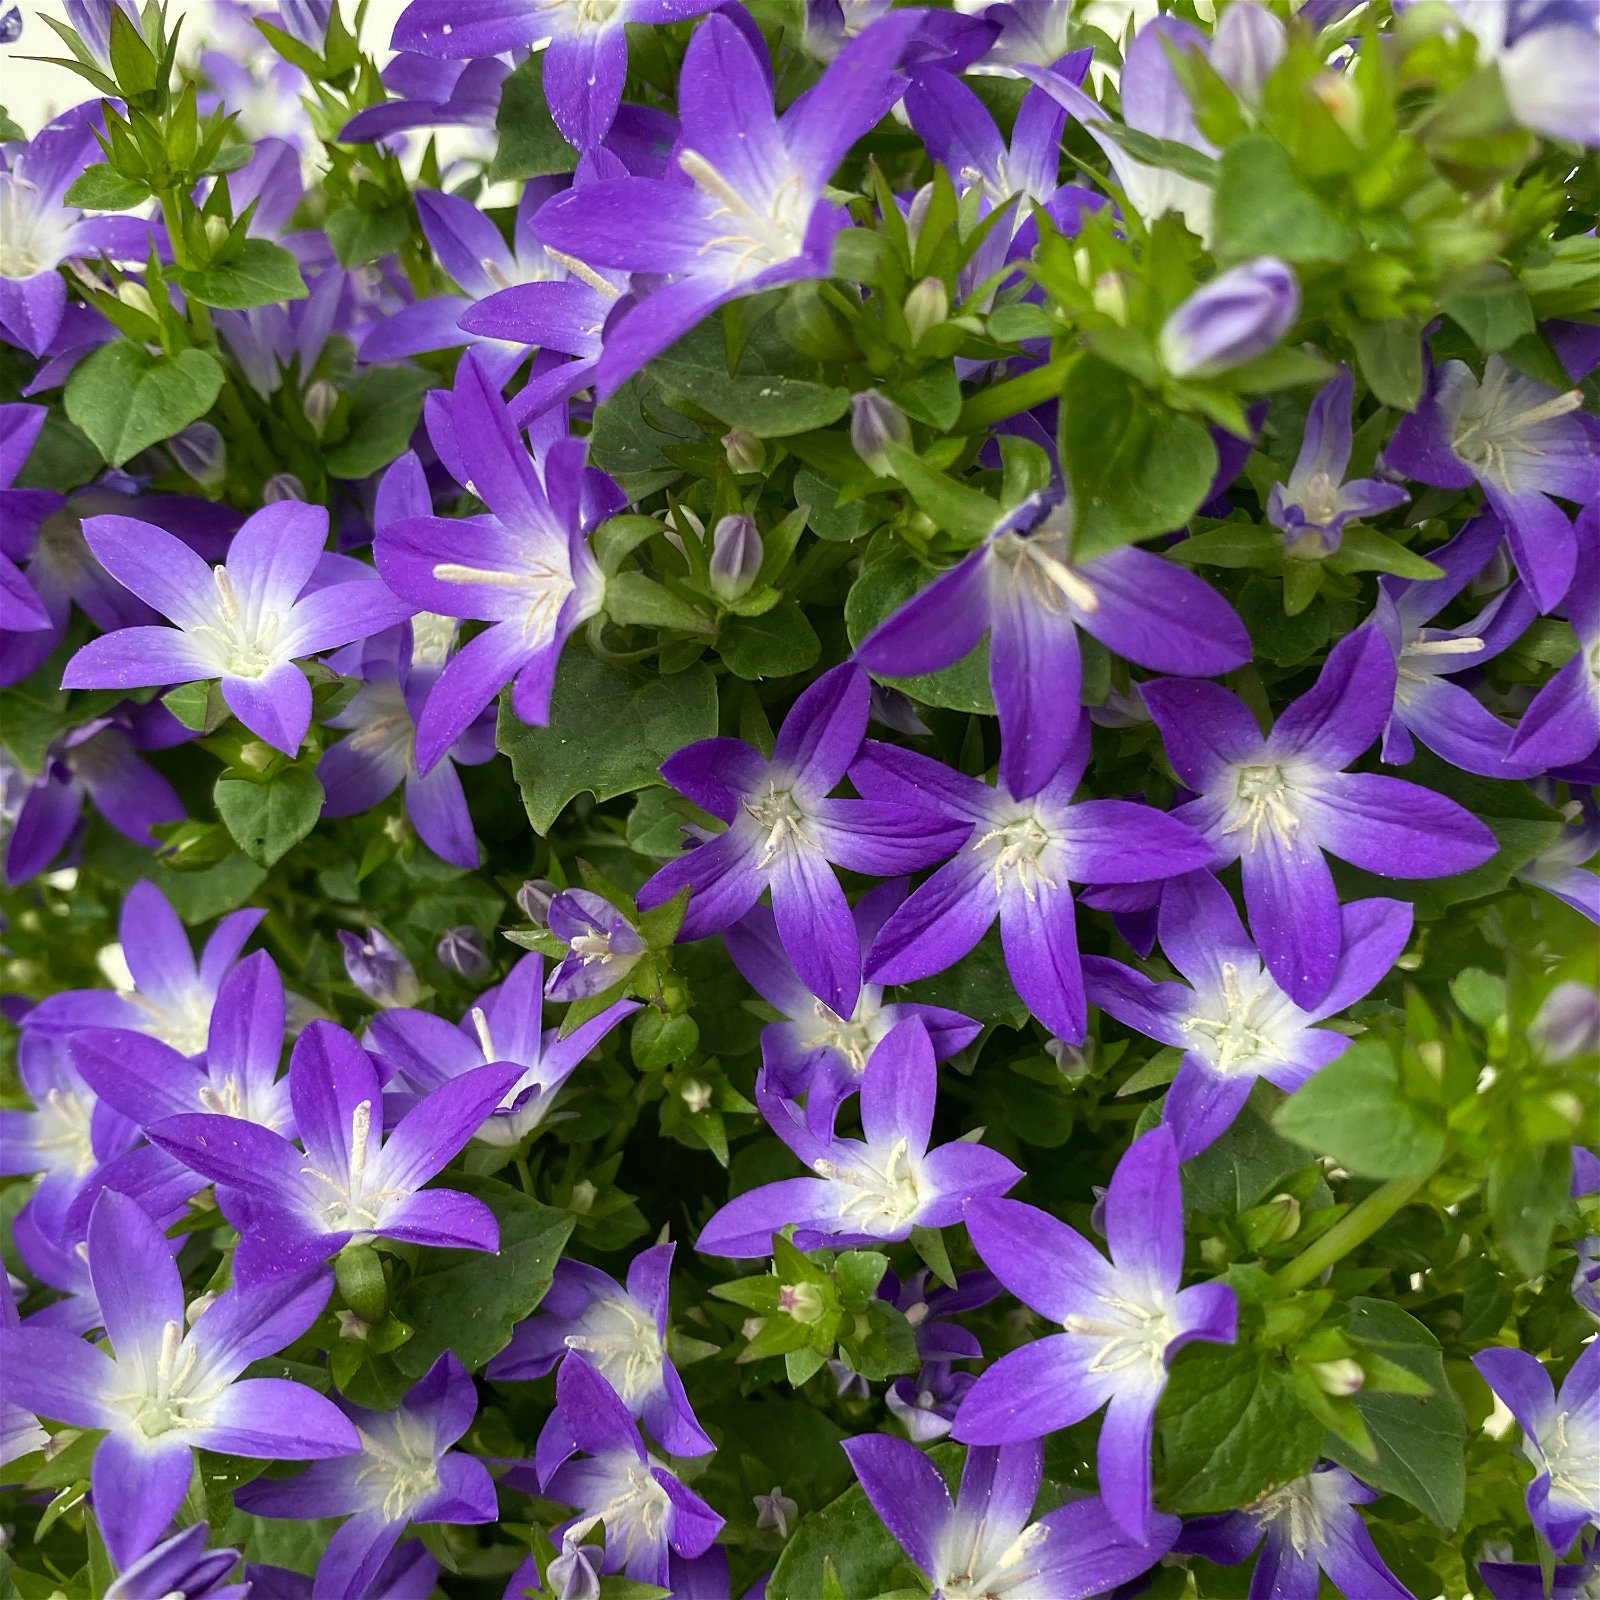 Hängepolster-Glockenblume 'Adansa® Purple' blau-weiß, Topf-Ø 15 cm, 3er-Set